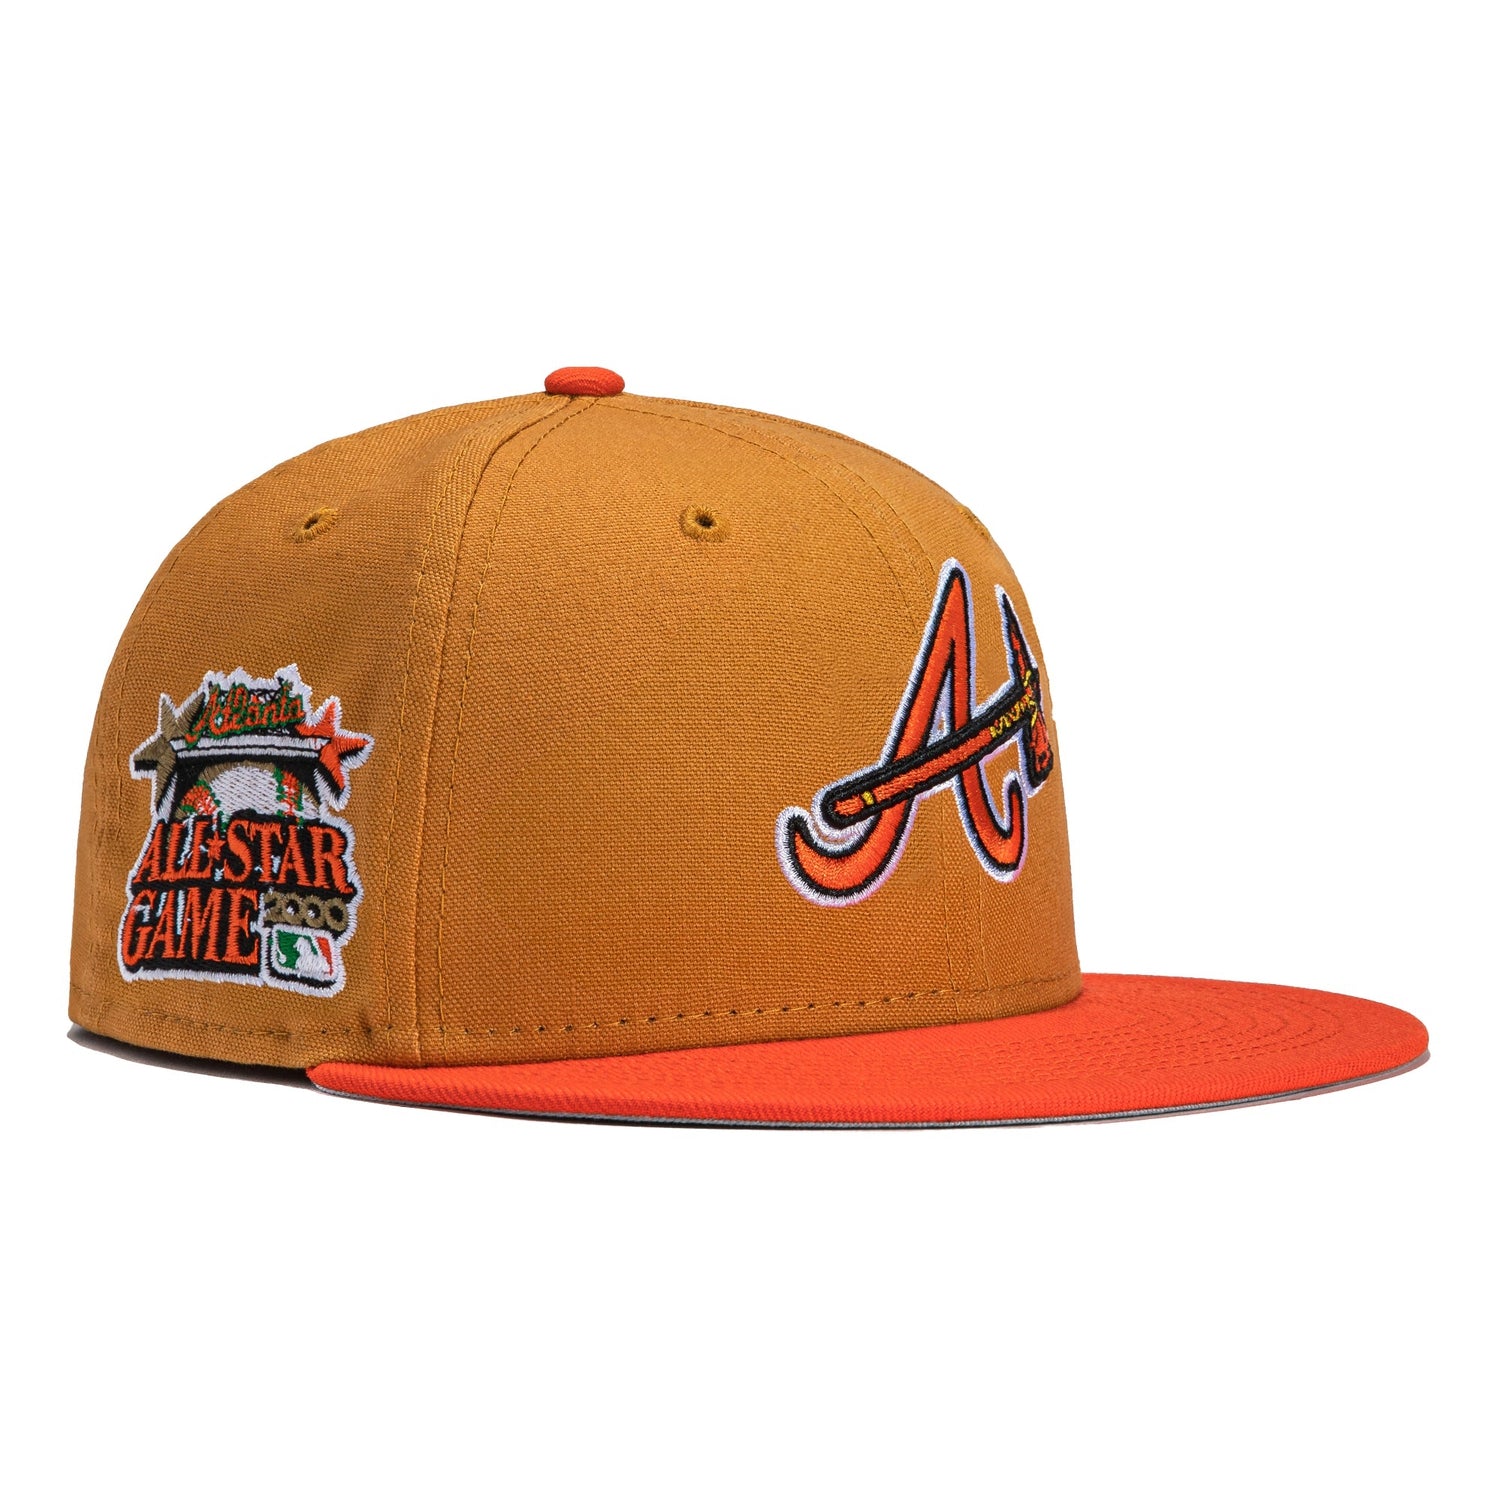 Atlanta Braves Tomahawk 47' brand MVP Adjustable MLB Hat